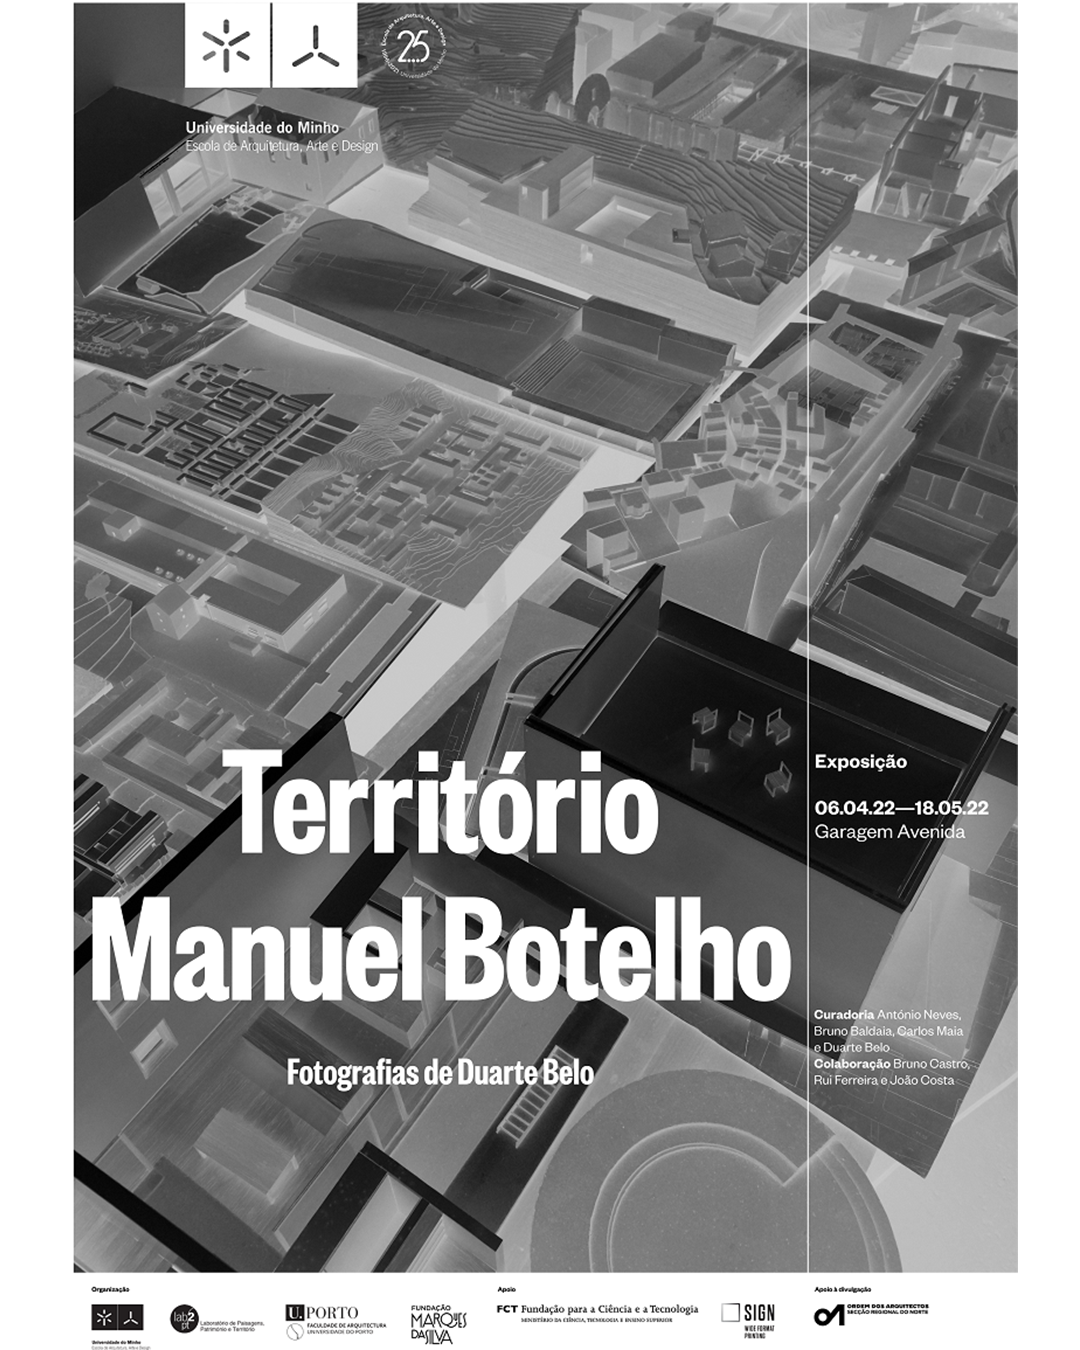 ‘Território Manuel Botelho’ image